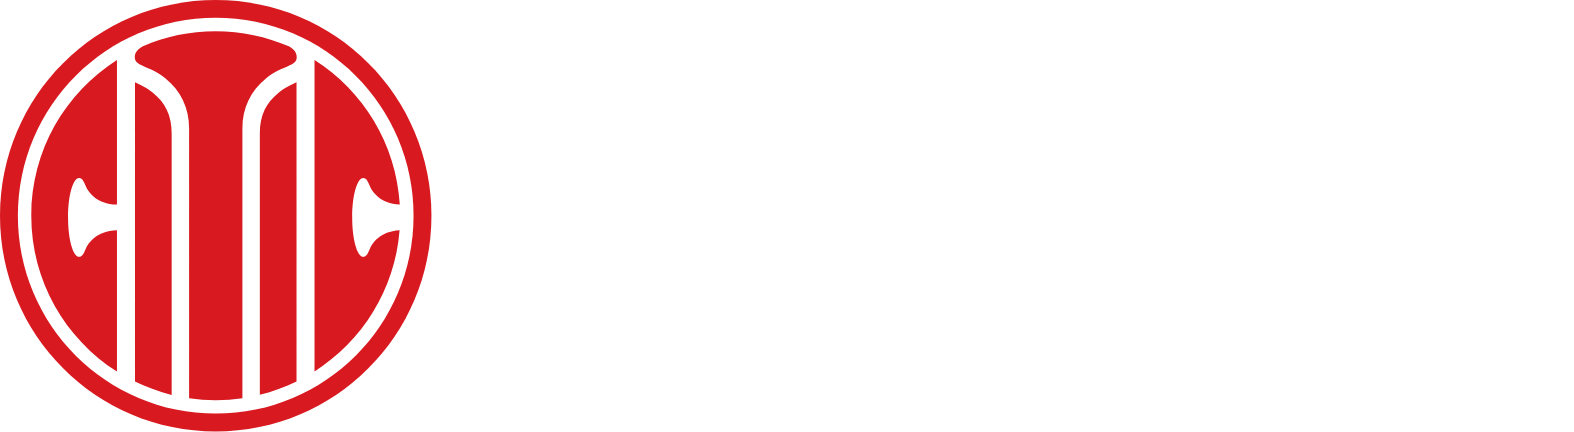 CITIC Bank logo large for dark backgrounds (transparent PNG)